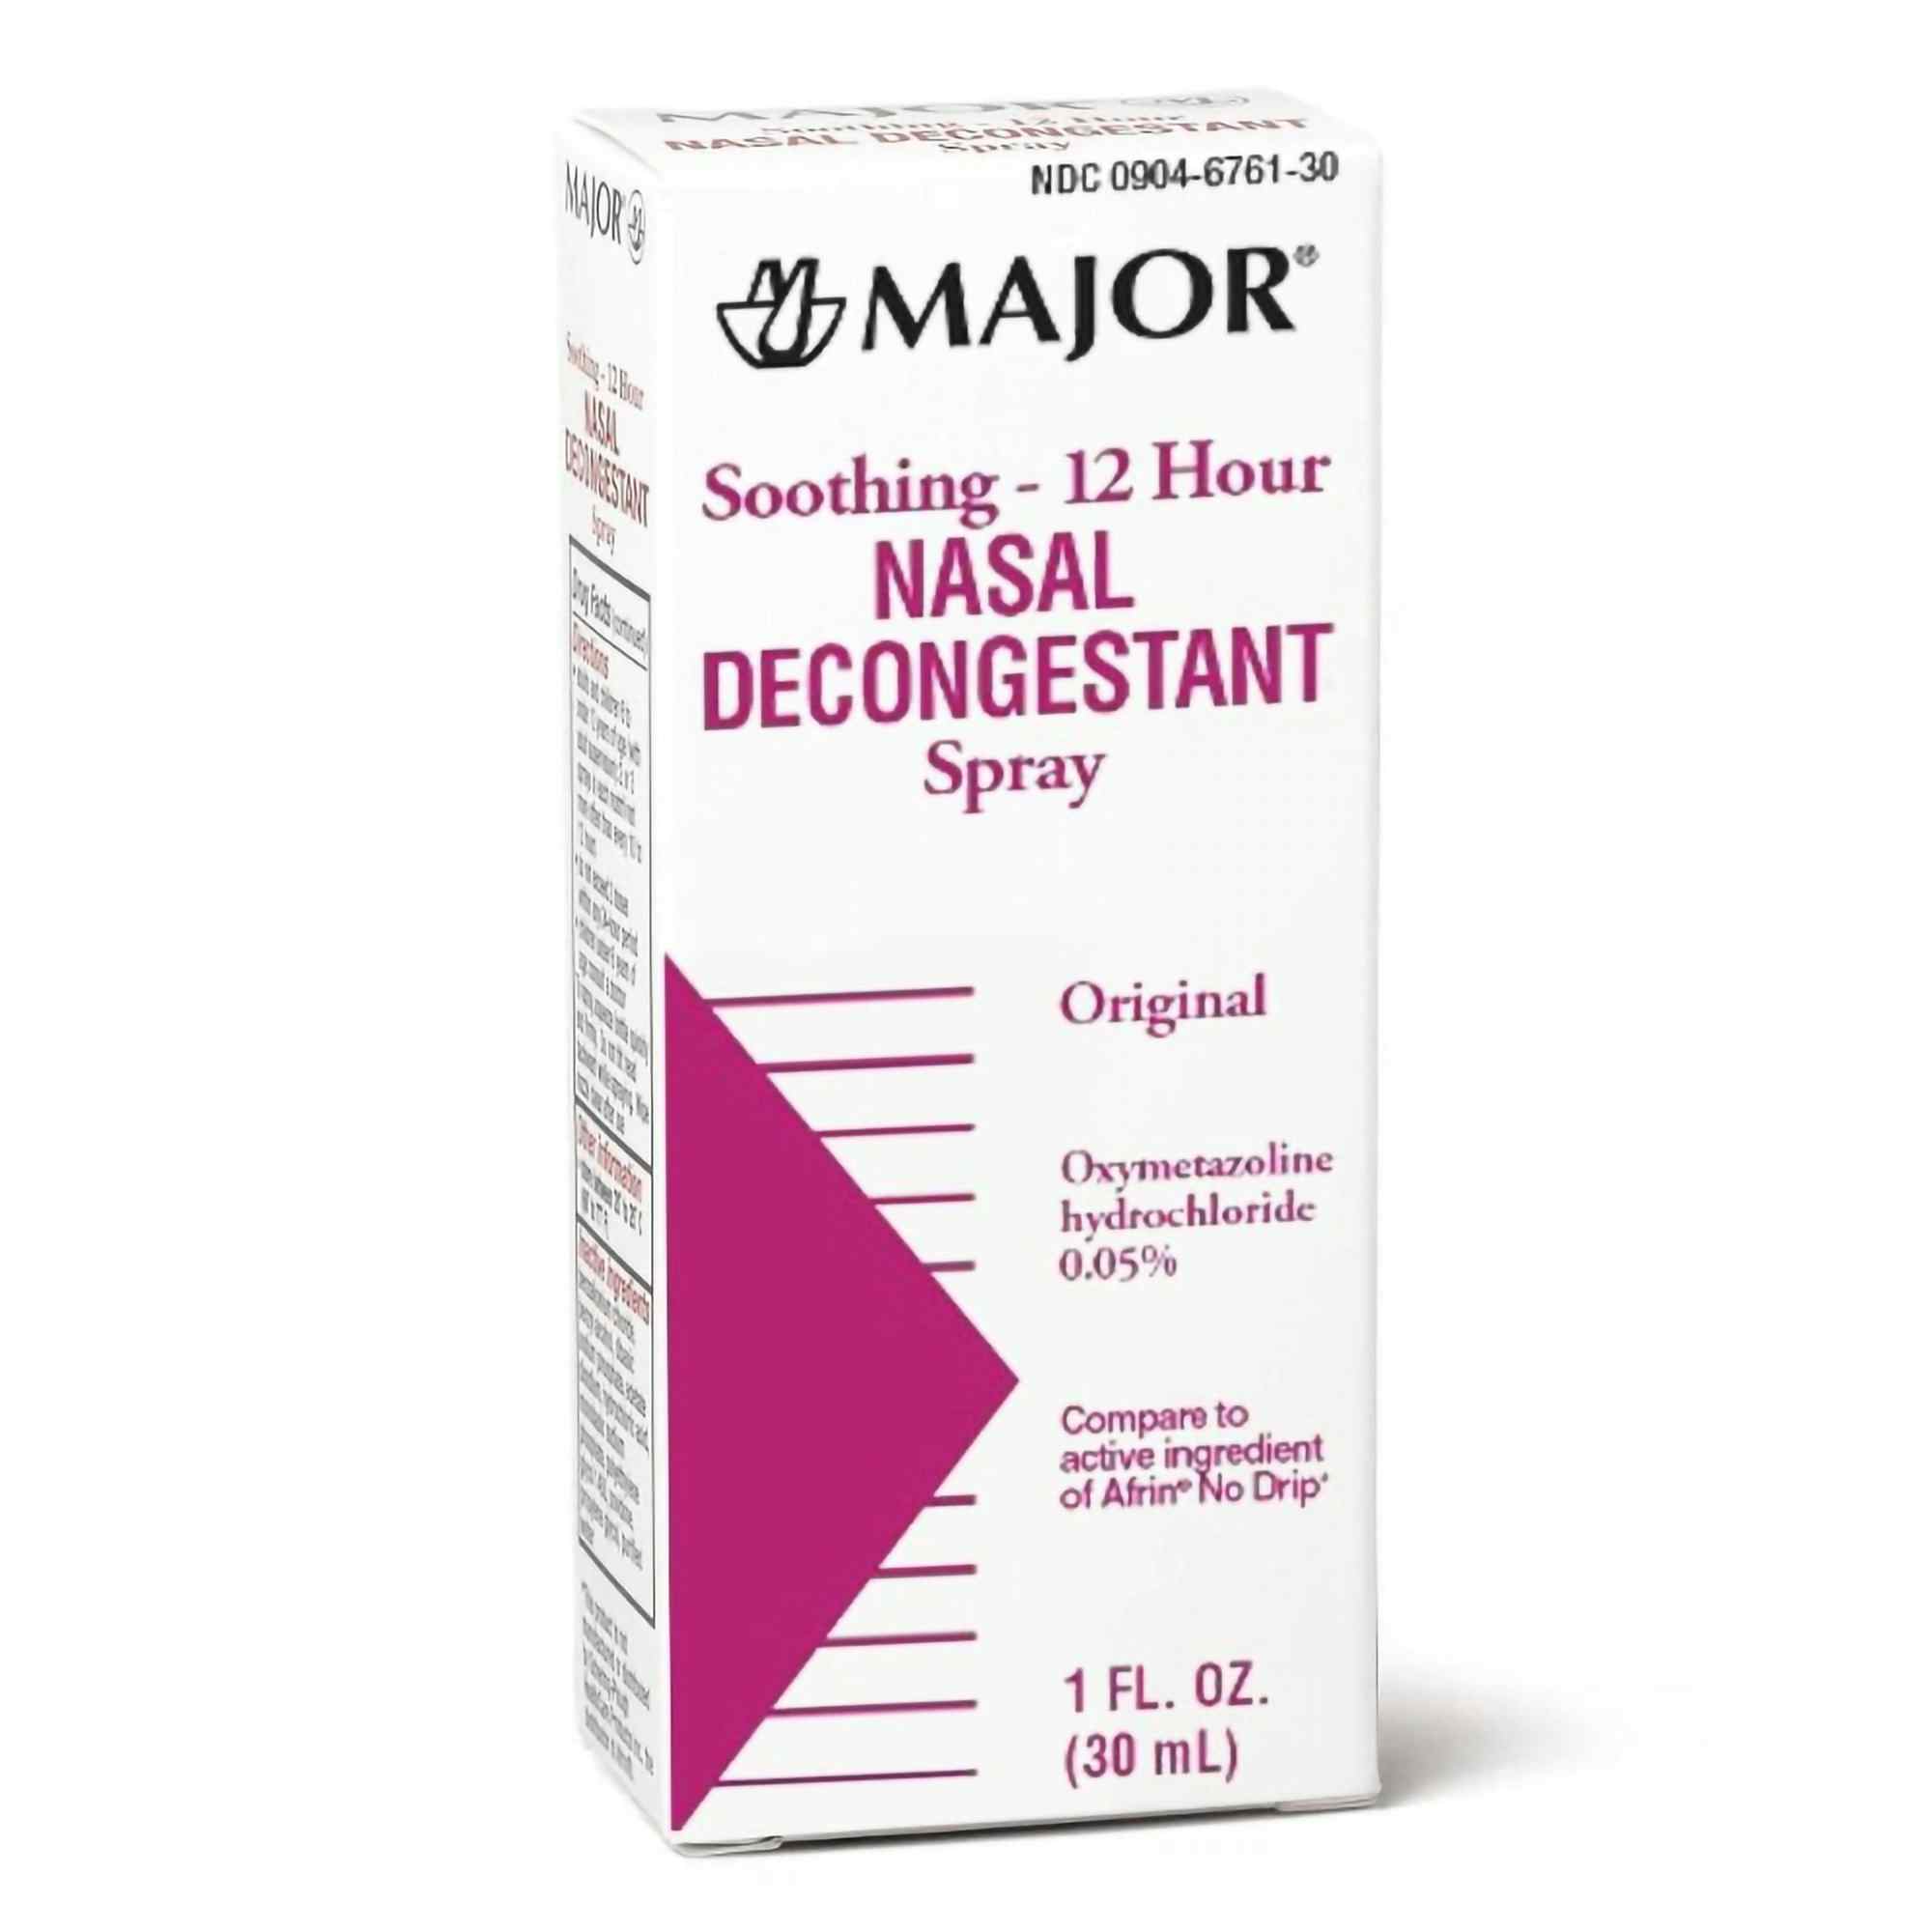 Major Soothing 12 Hour Nasal Decongestant Spray